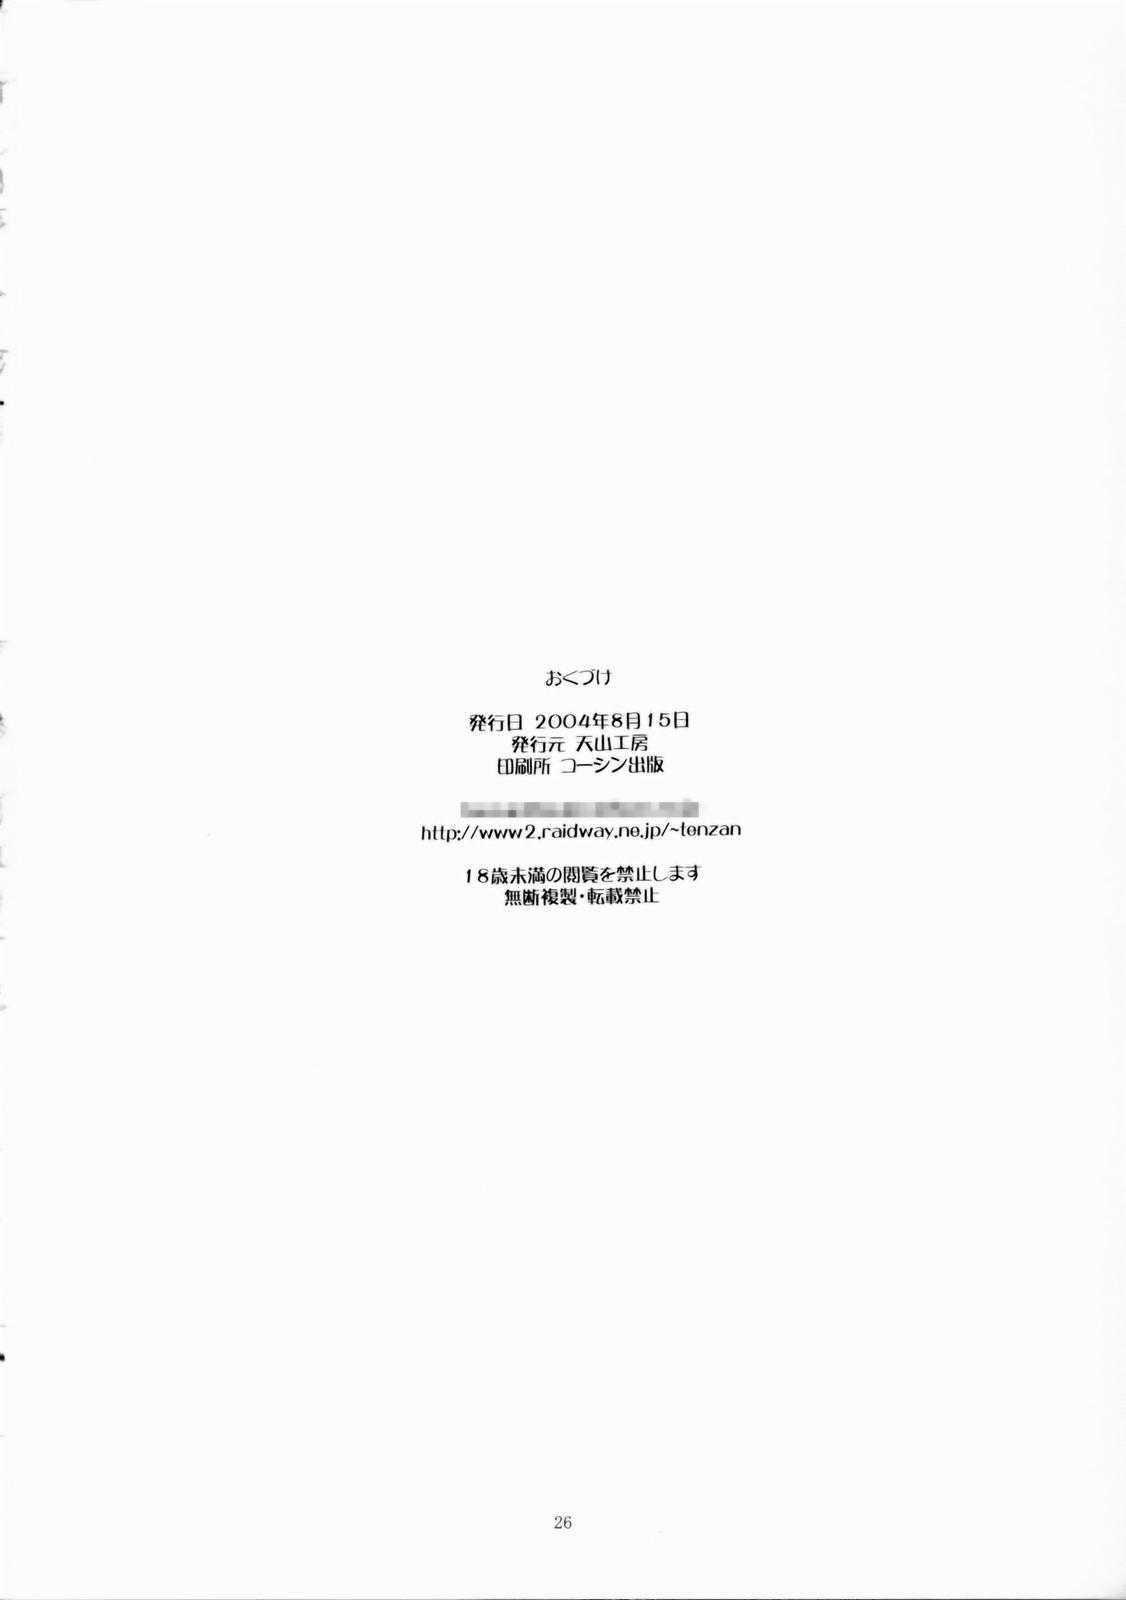 [Tenzan Factory] Nightmare of My Goddess vol.7-2 (Ah! Megami-sama/Ah! My Goddess)(chinese) [天山工房] Nightmare of My Goddess vol.7-2 (ああっ女神さまっ)(里流浪猫汉化组)